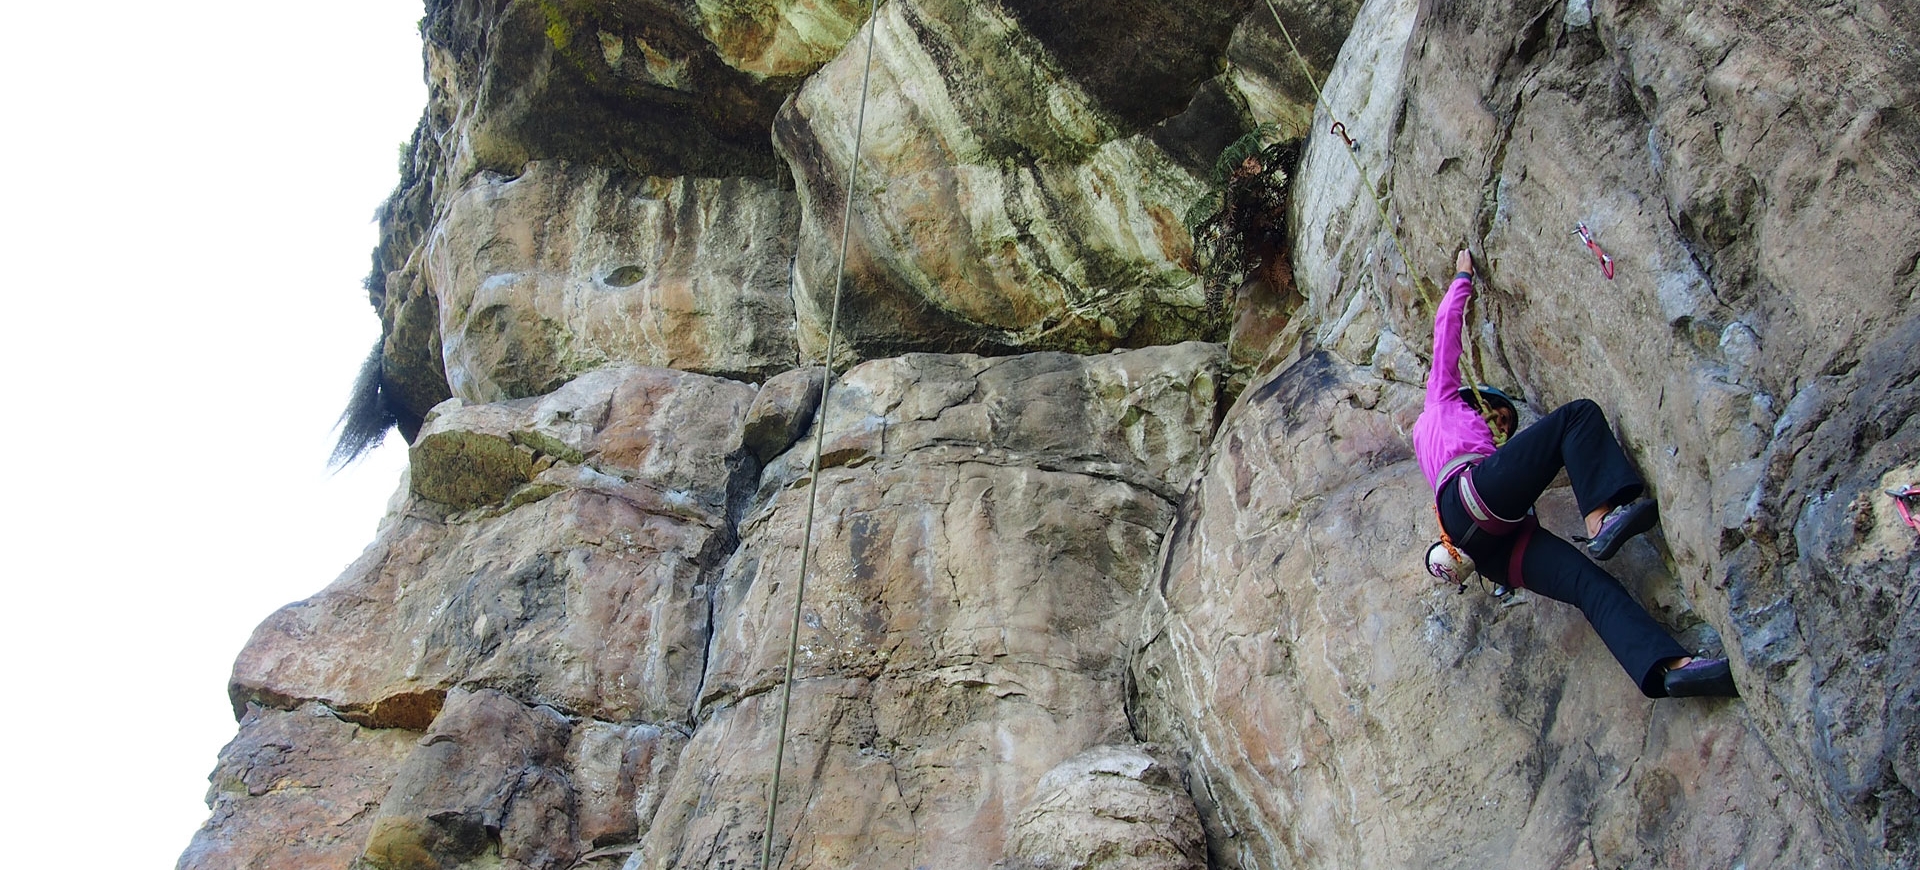 Tour de un Día de Escalada en Roca en Suesca